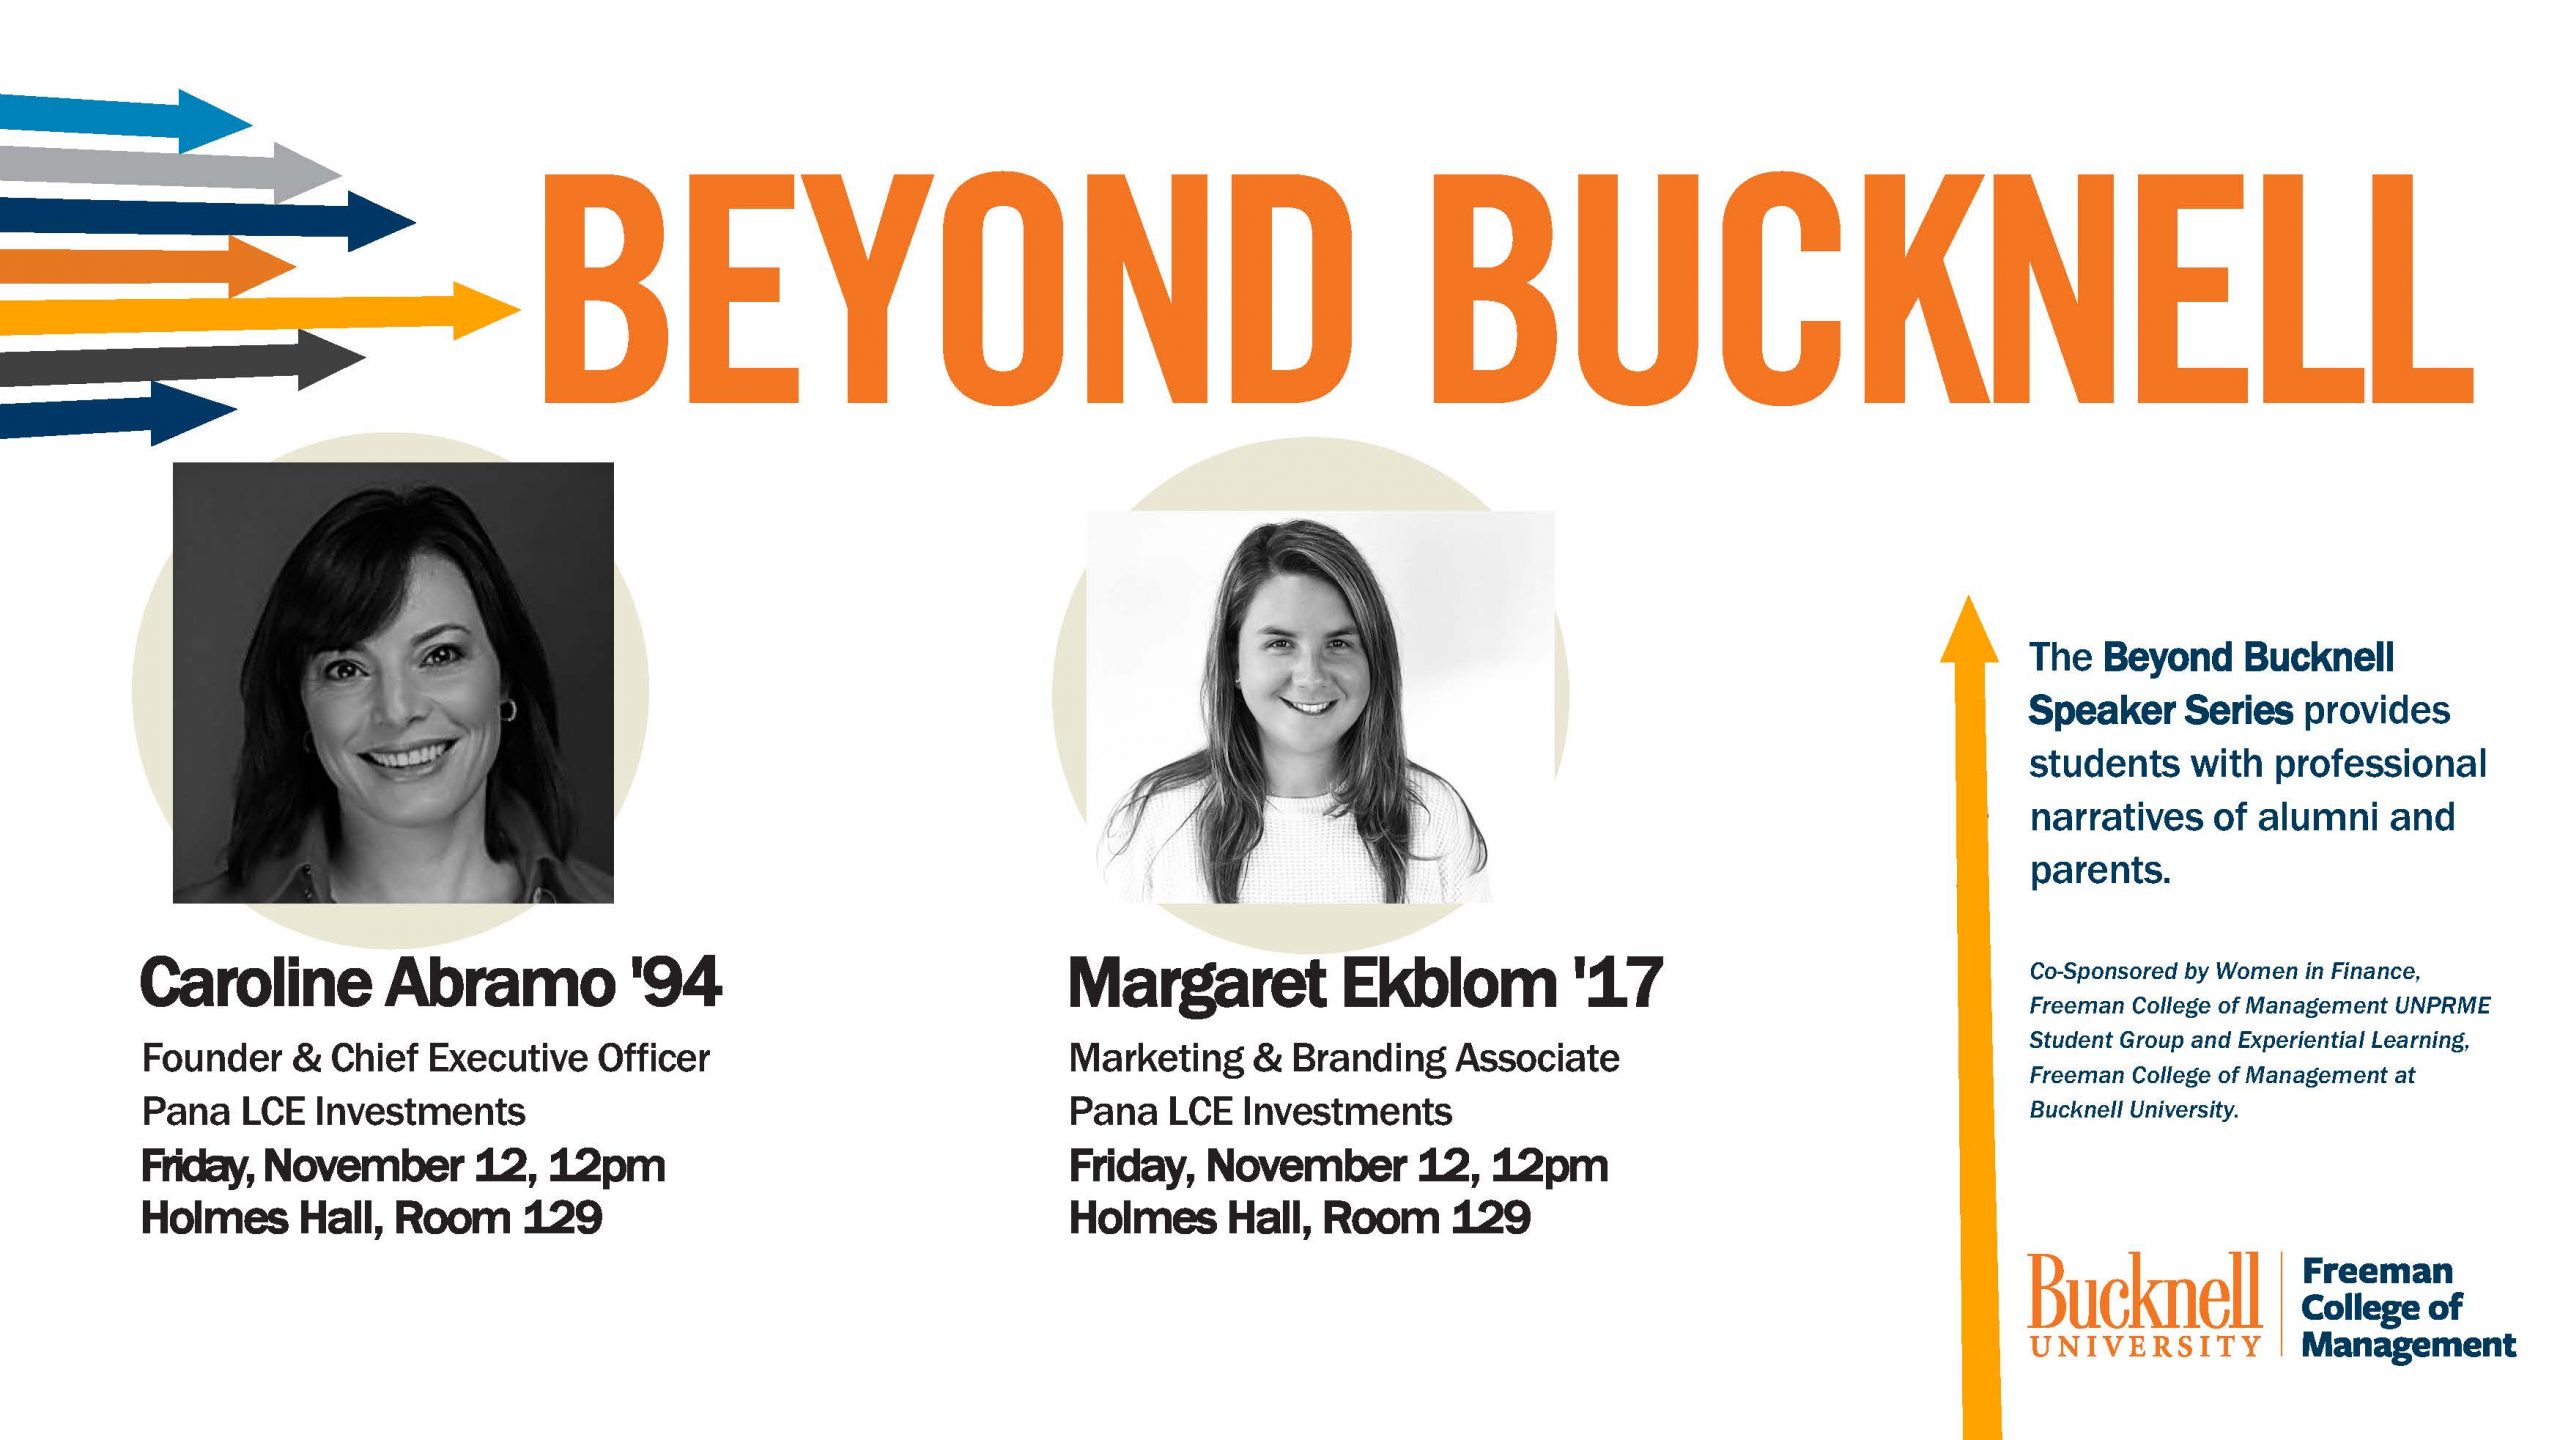 Beyond Bucknell Speaker Series presents Caroline Abramo and Margaret Ekblom, Pana LCE Investments